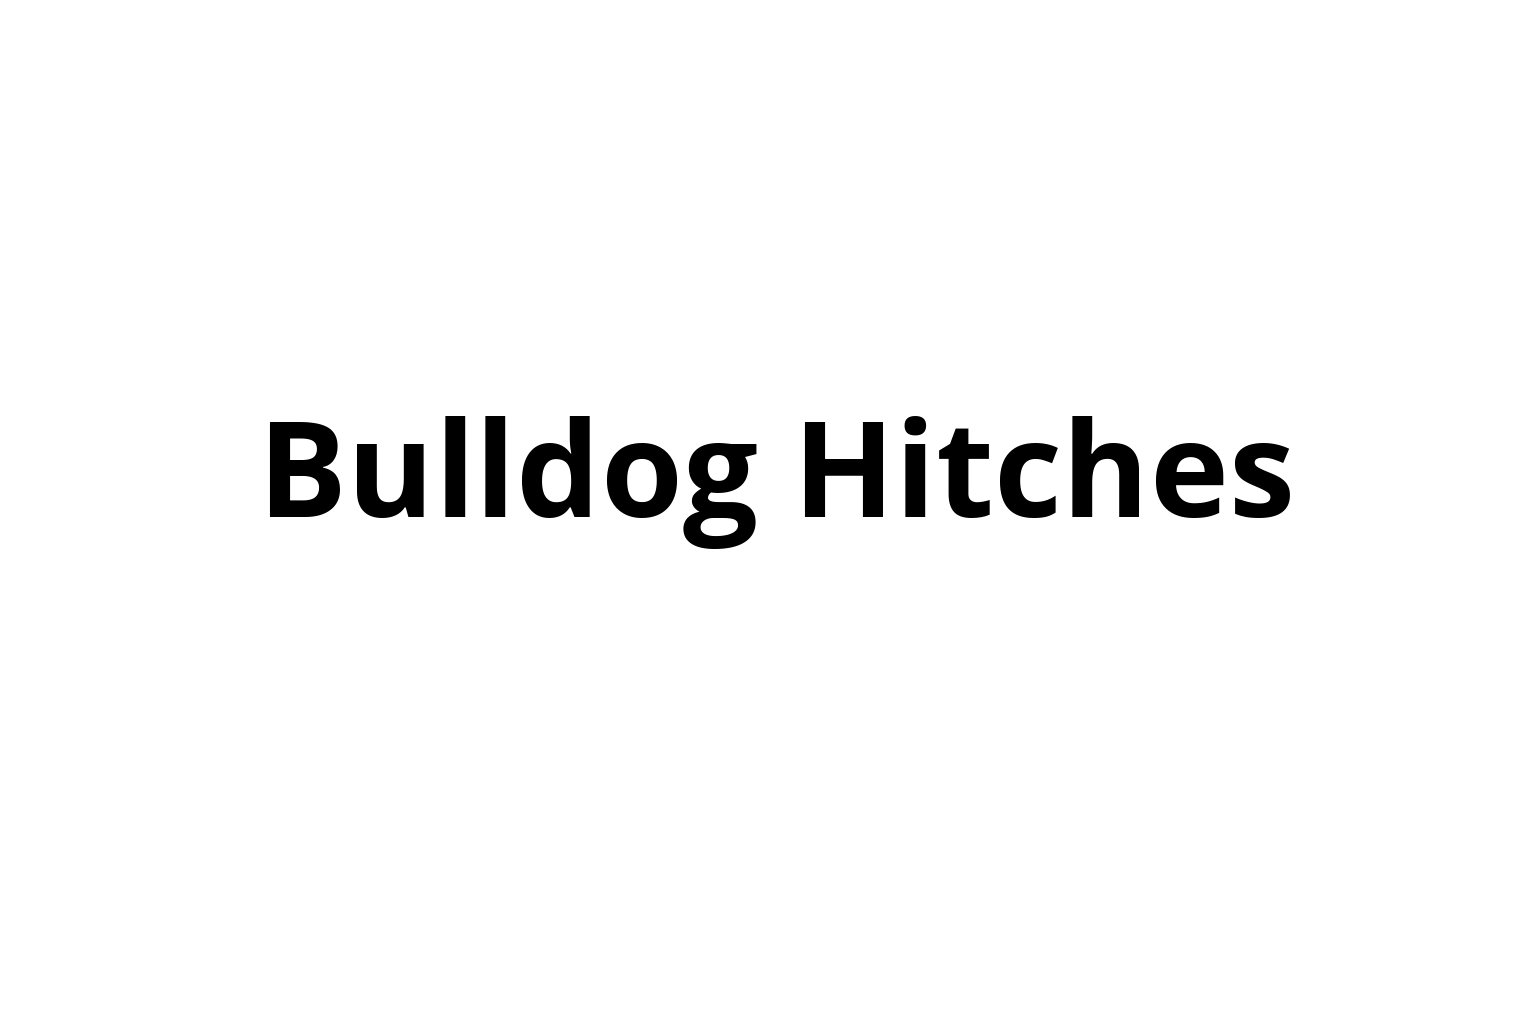 Bulldog Hitches